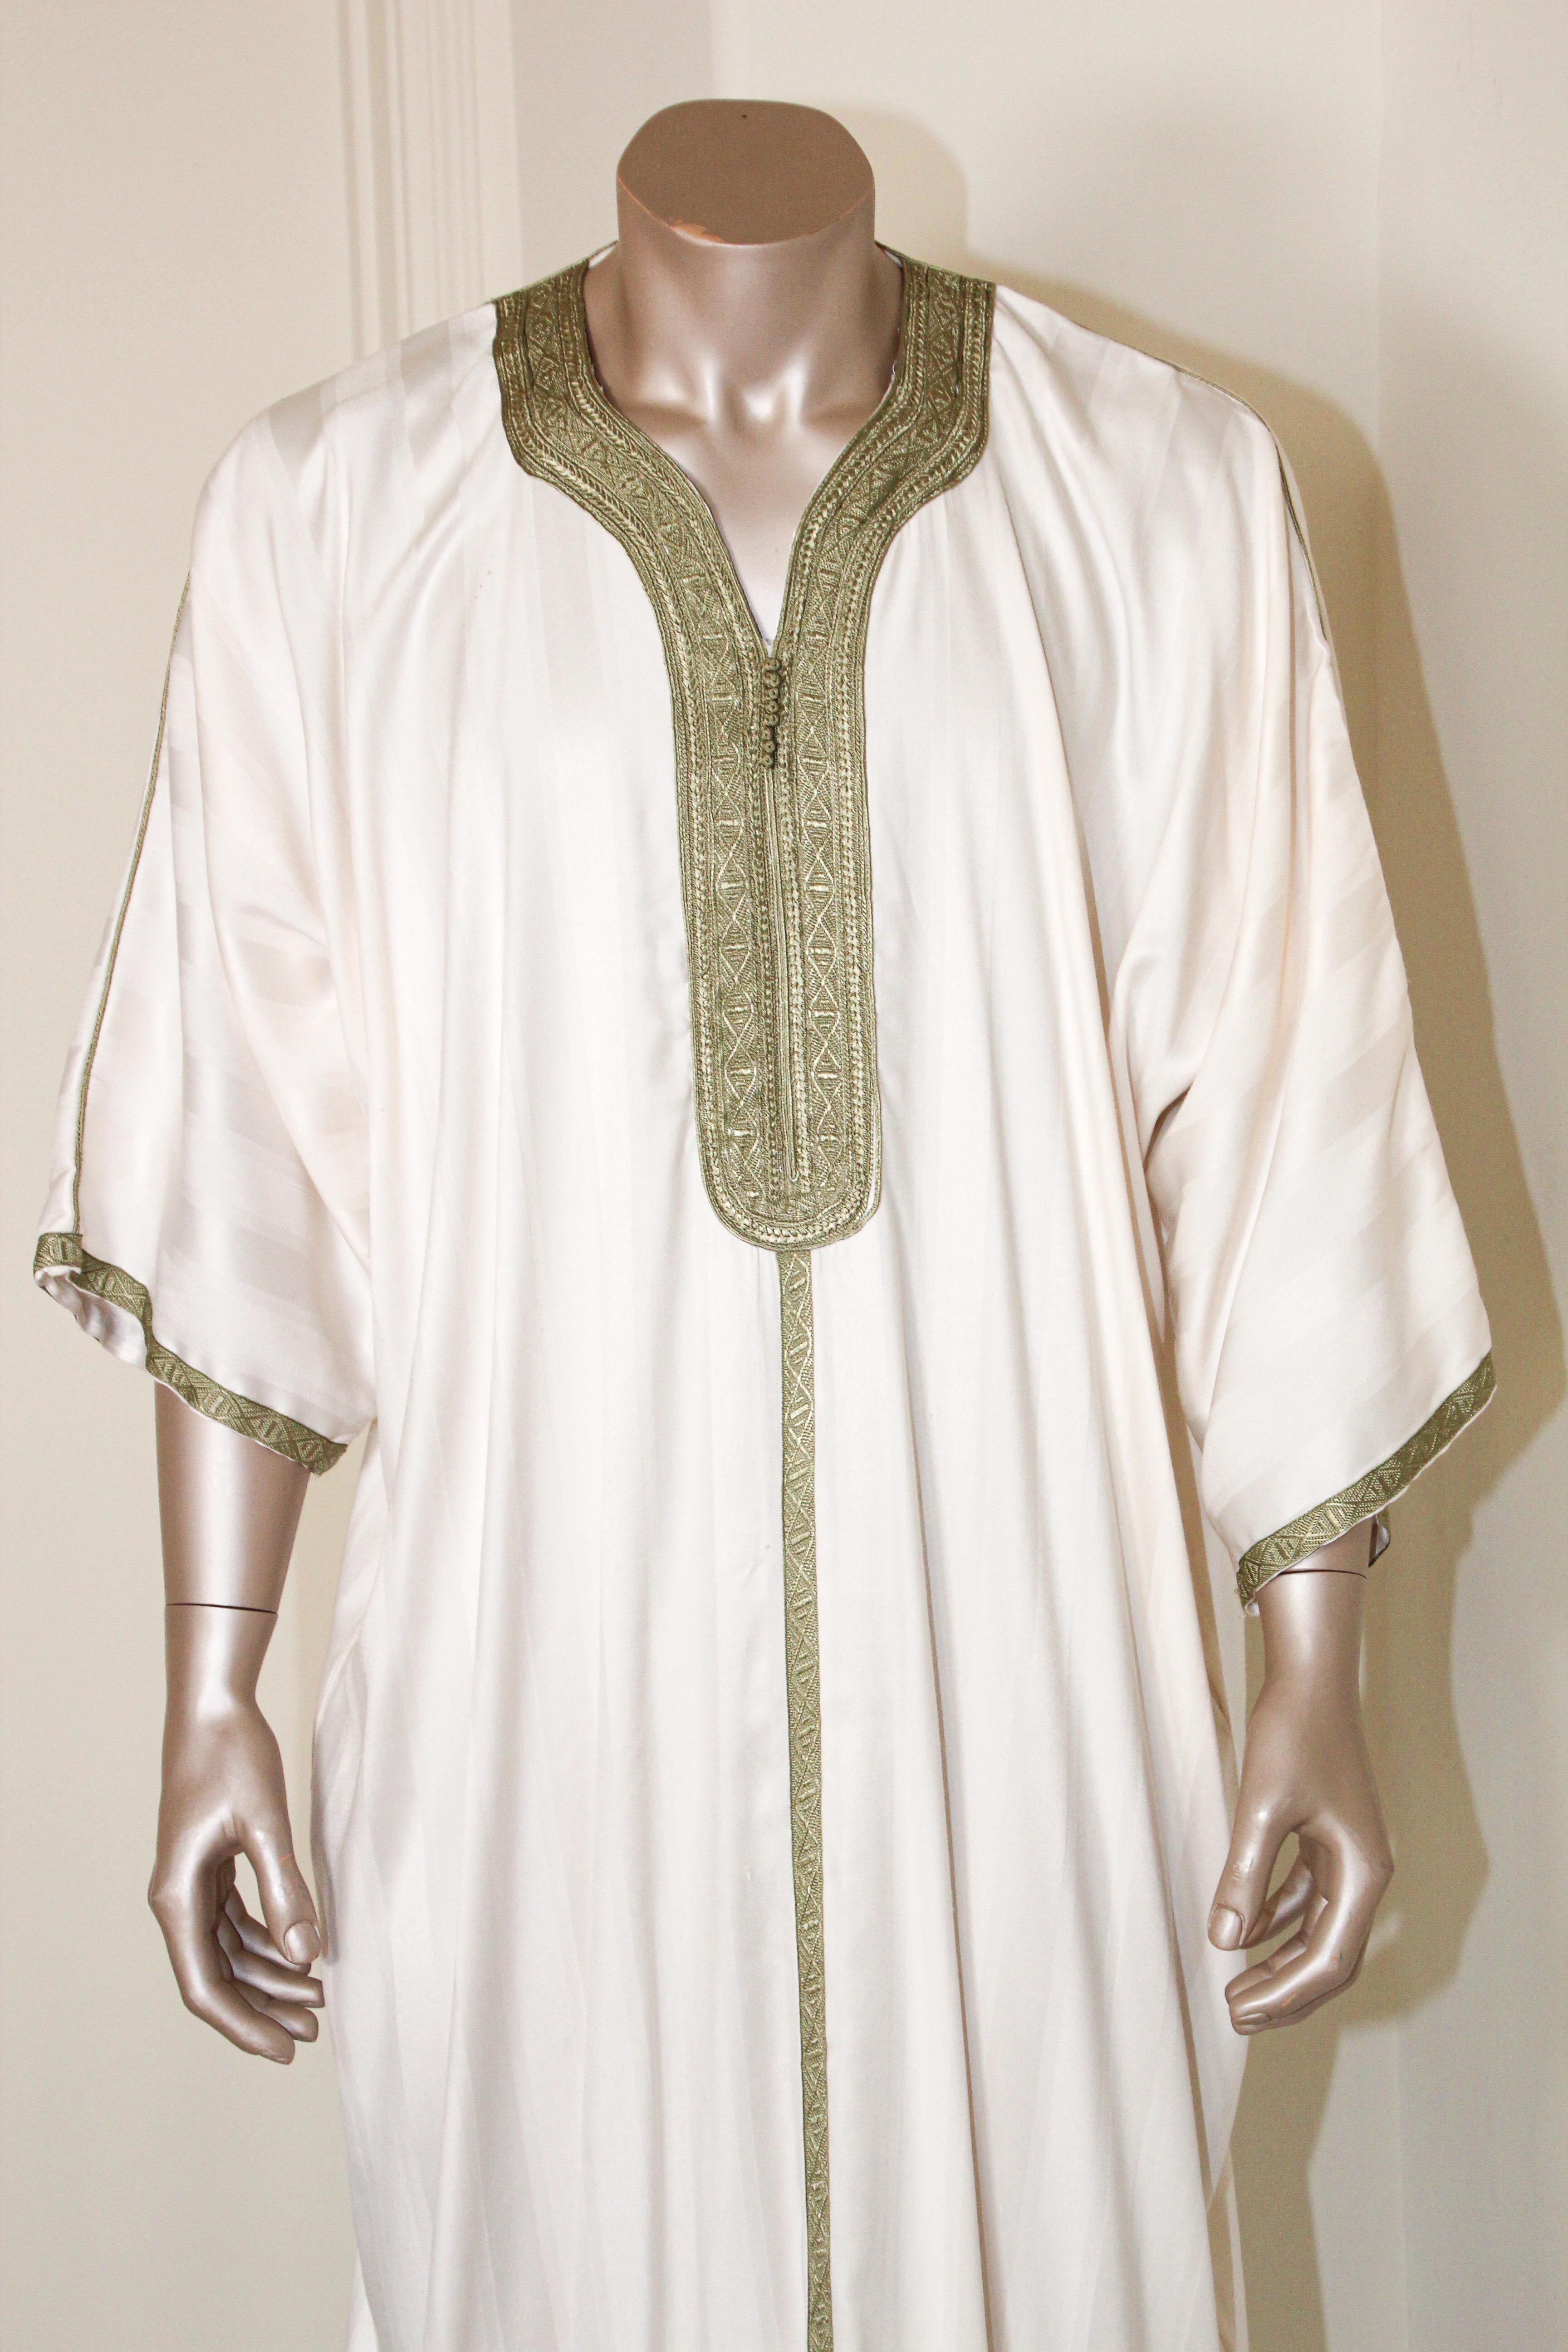 Moorish Moroccan Vintage Gentleman Caftan White with Green Trim For Sale